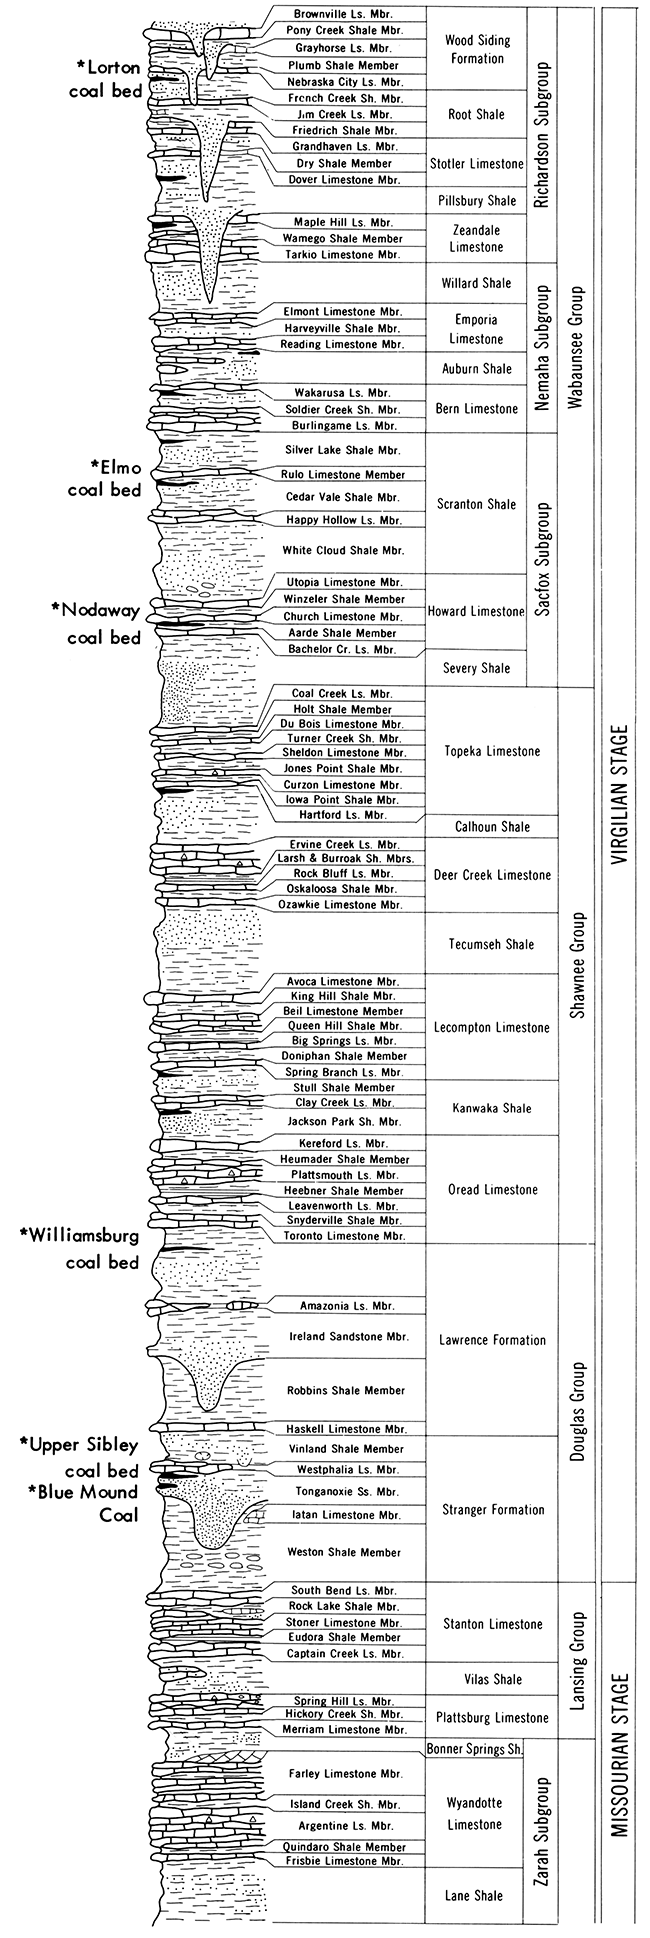 Stratigraphic distribution of bituminous coals having strippable coal reserves in Kansas